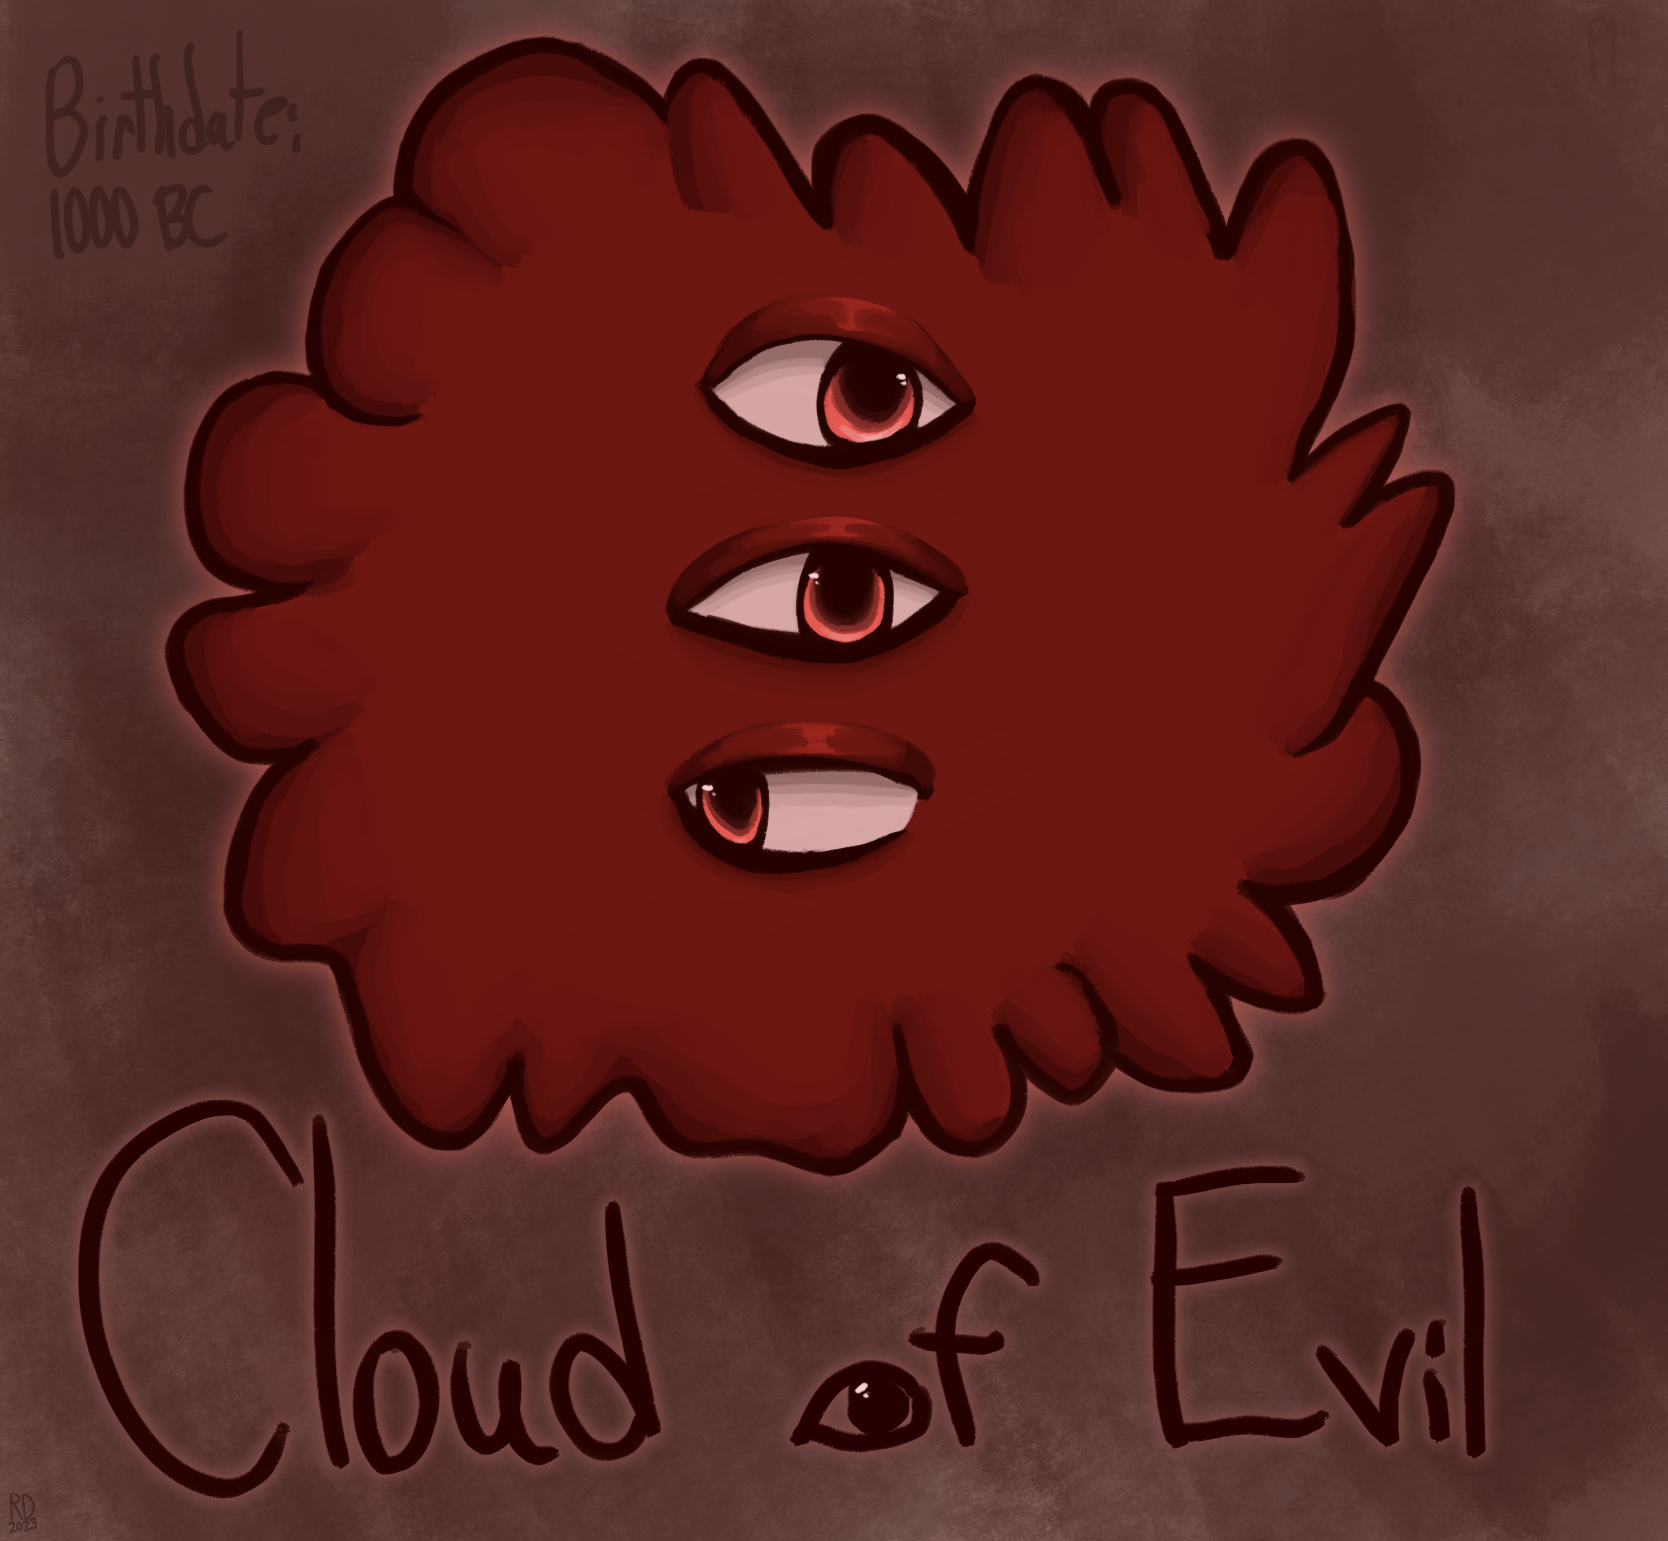 Cloud Of Evil